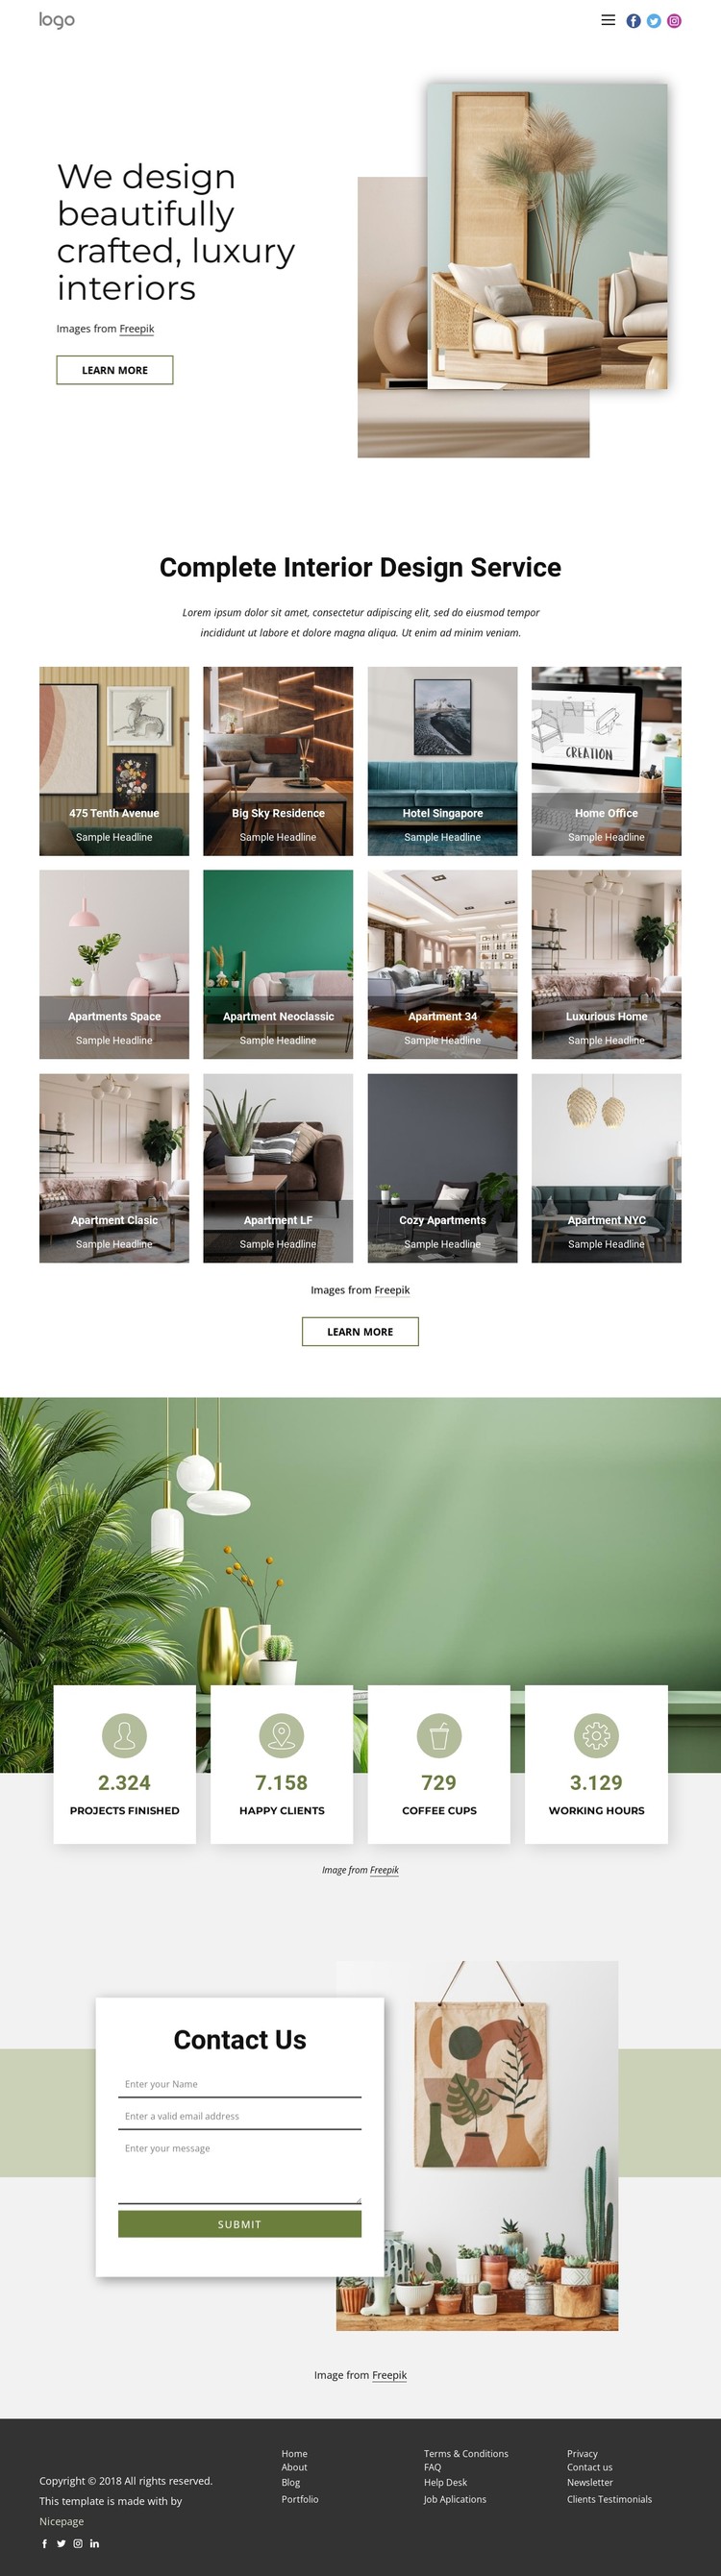 We design luxury interiors CSS Template